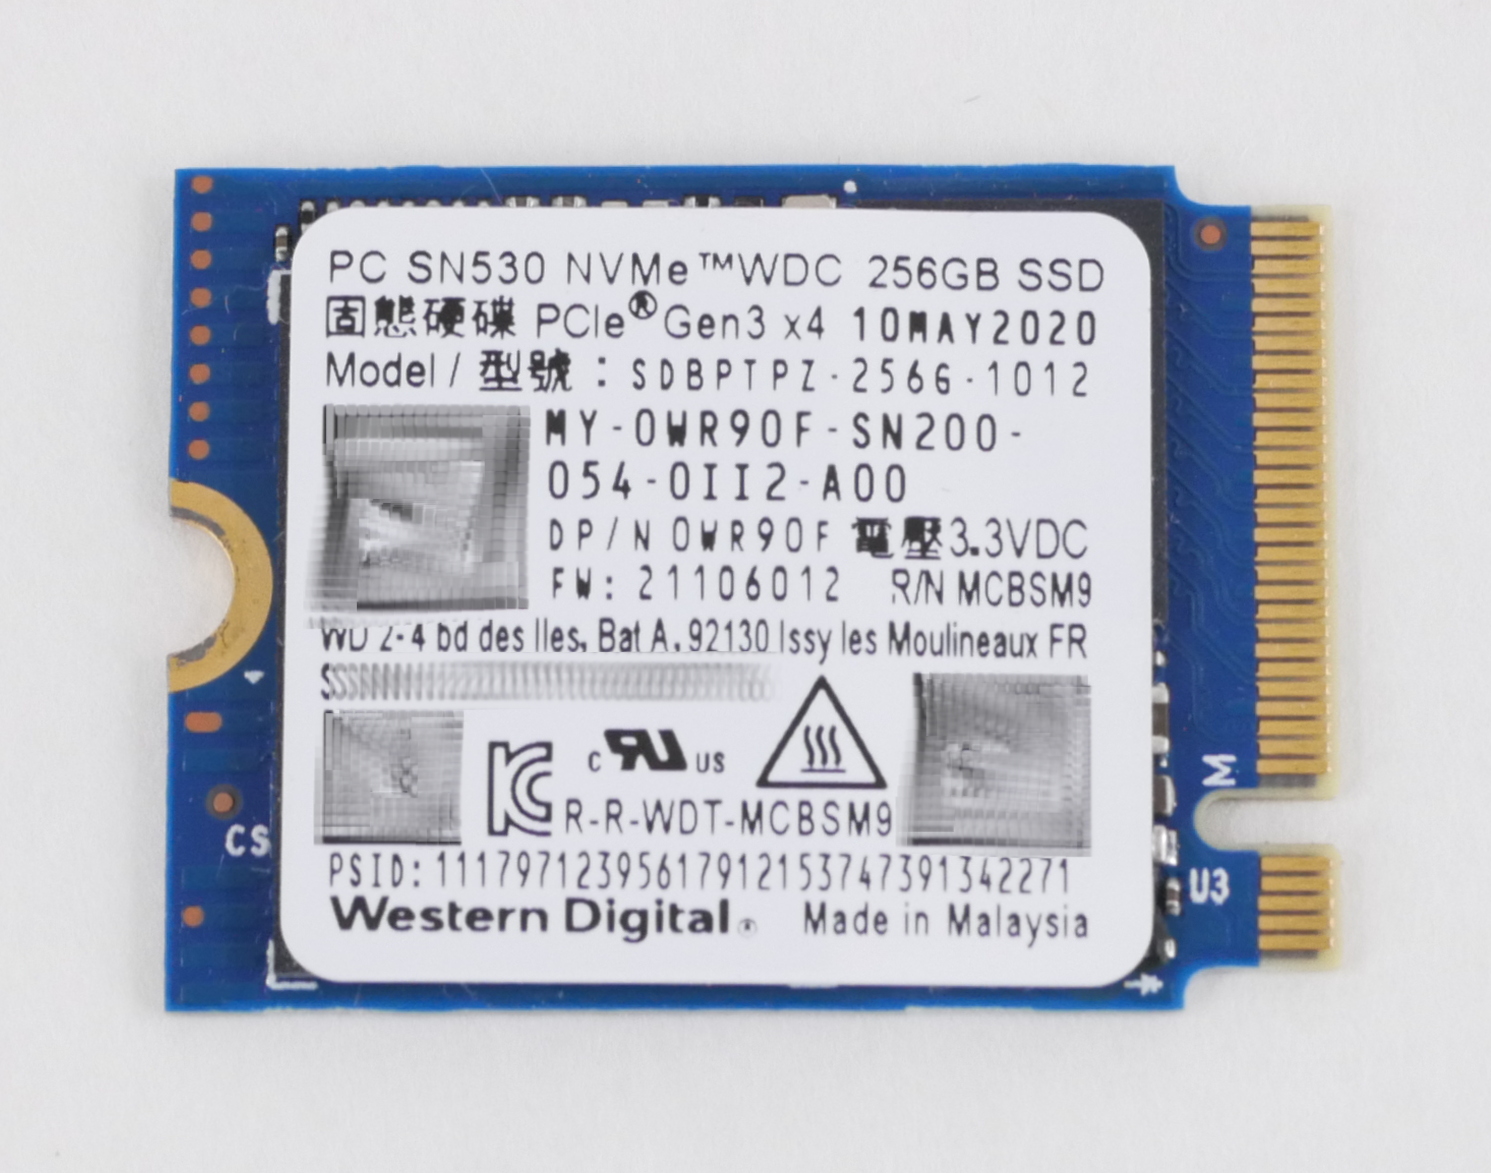 Dell WD 256GB SDBPTPZ-256G-1012 PC SN530 SSD NVMe PCIe Gen 3 x4 WR90F